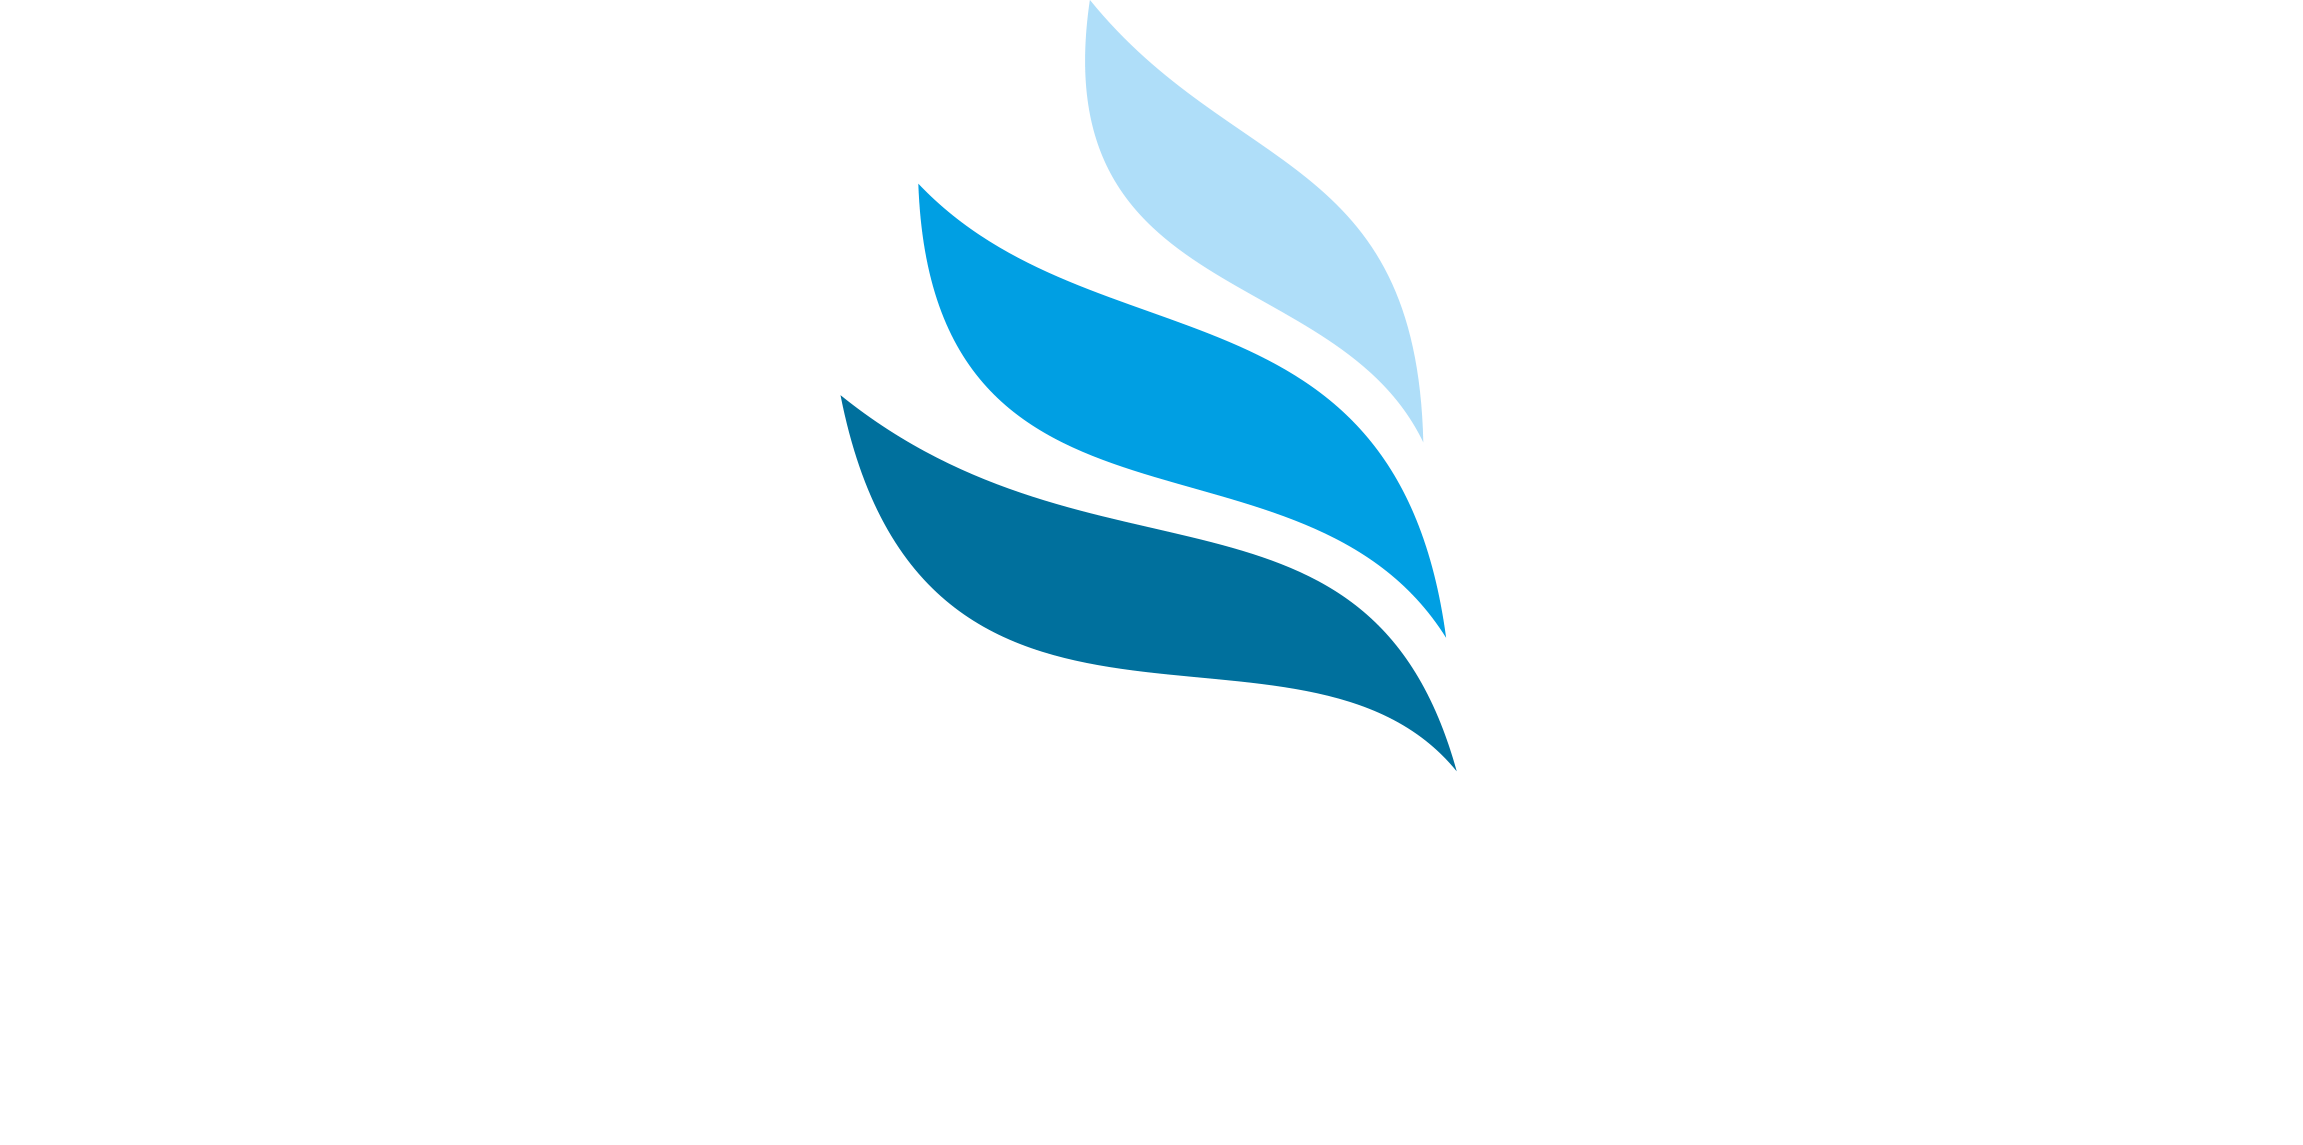 İnegöl Papel şirketi resmi logosu.